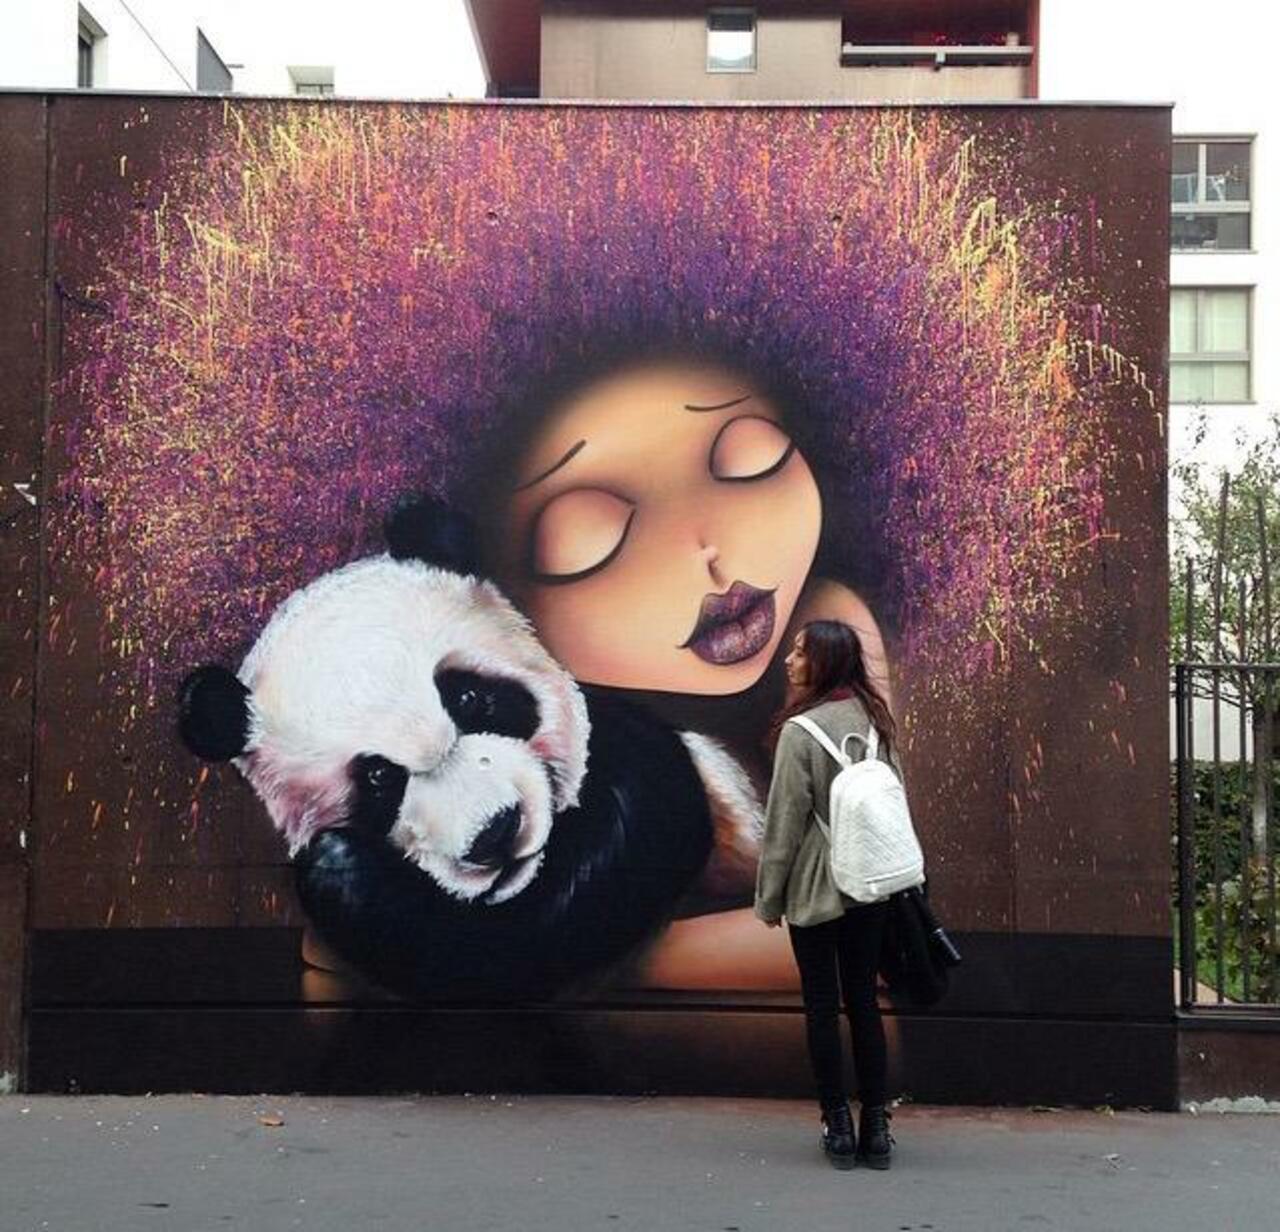 RT @mzajaeh: Street Art by VinieGraffiti in Paris 

#art #graffiti #mural #streetart http://t.co/CDWjLGR2oA